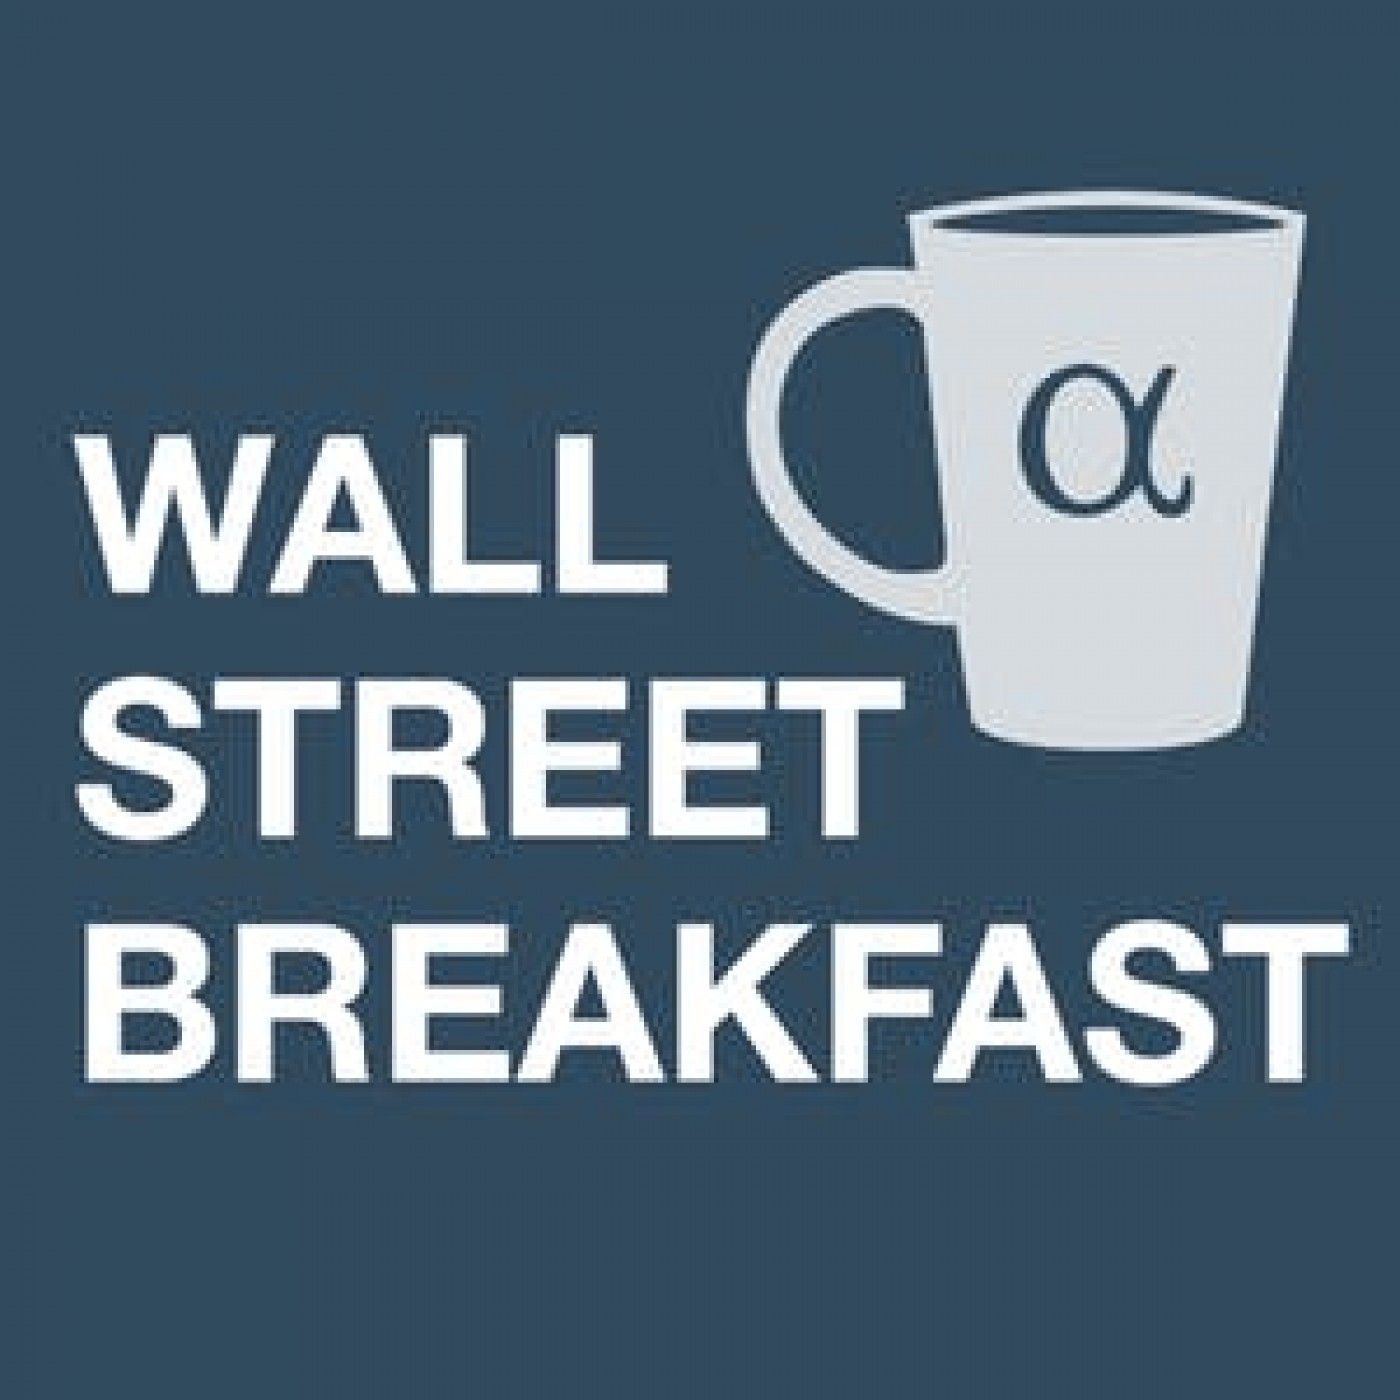 Wall Street Breakfast July 22: Snap Nosedives as Revenue Falls Short, Company Pulls Guidance